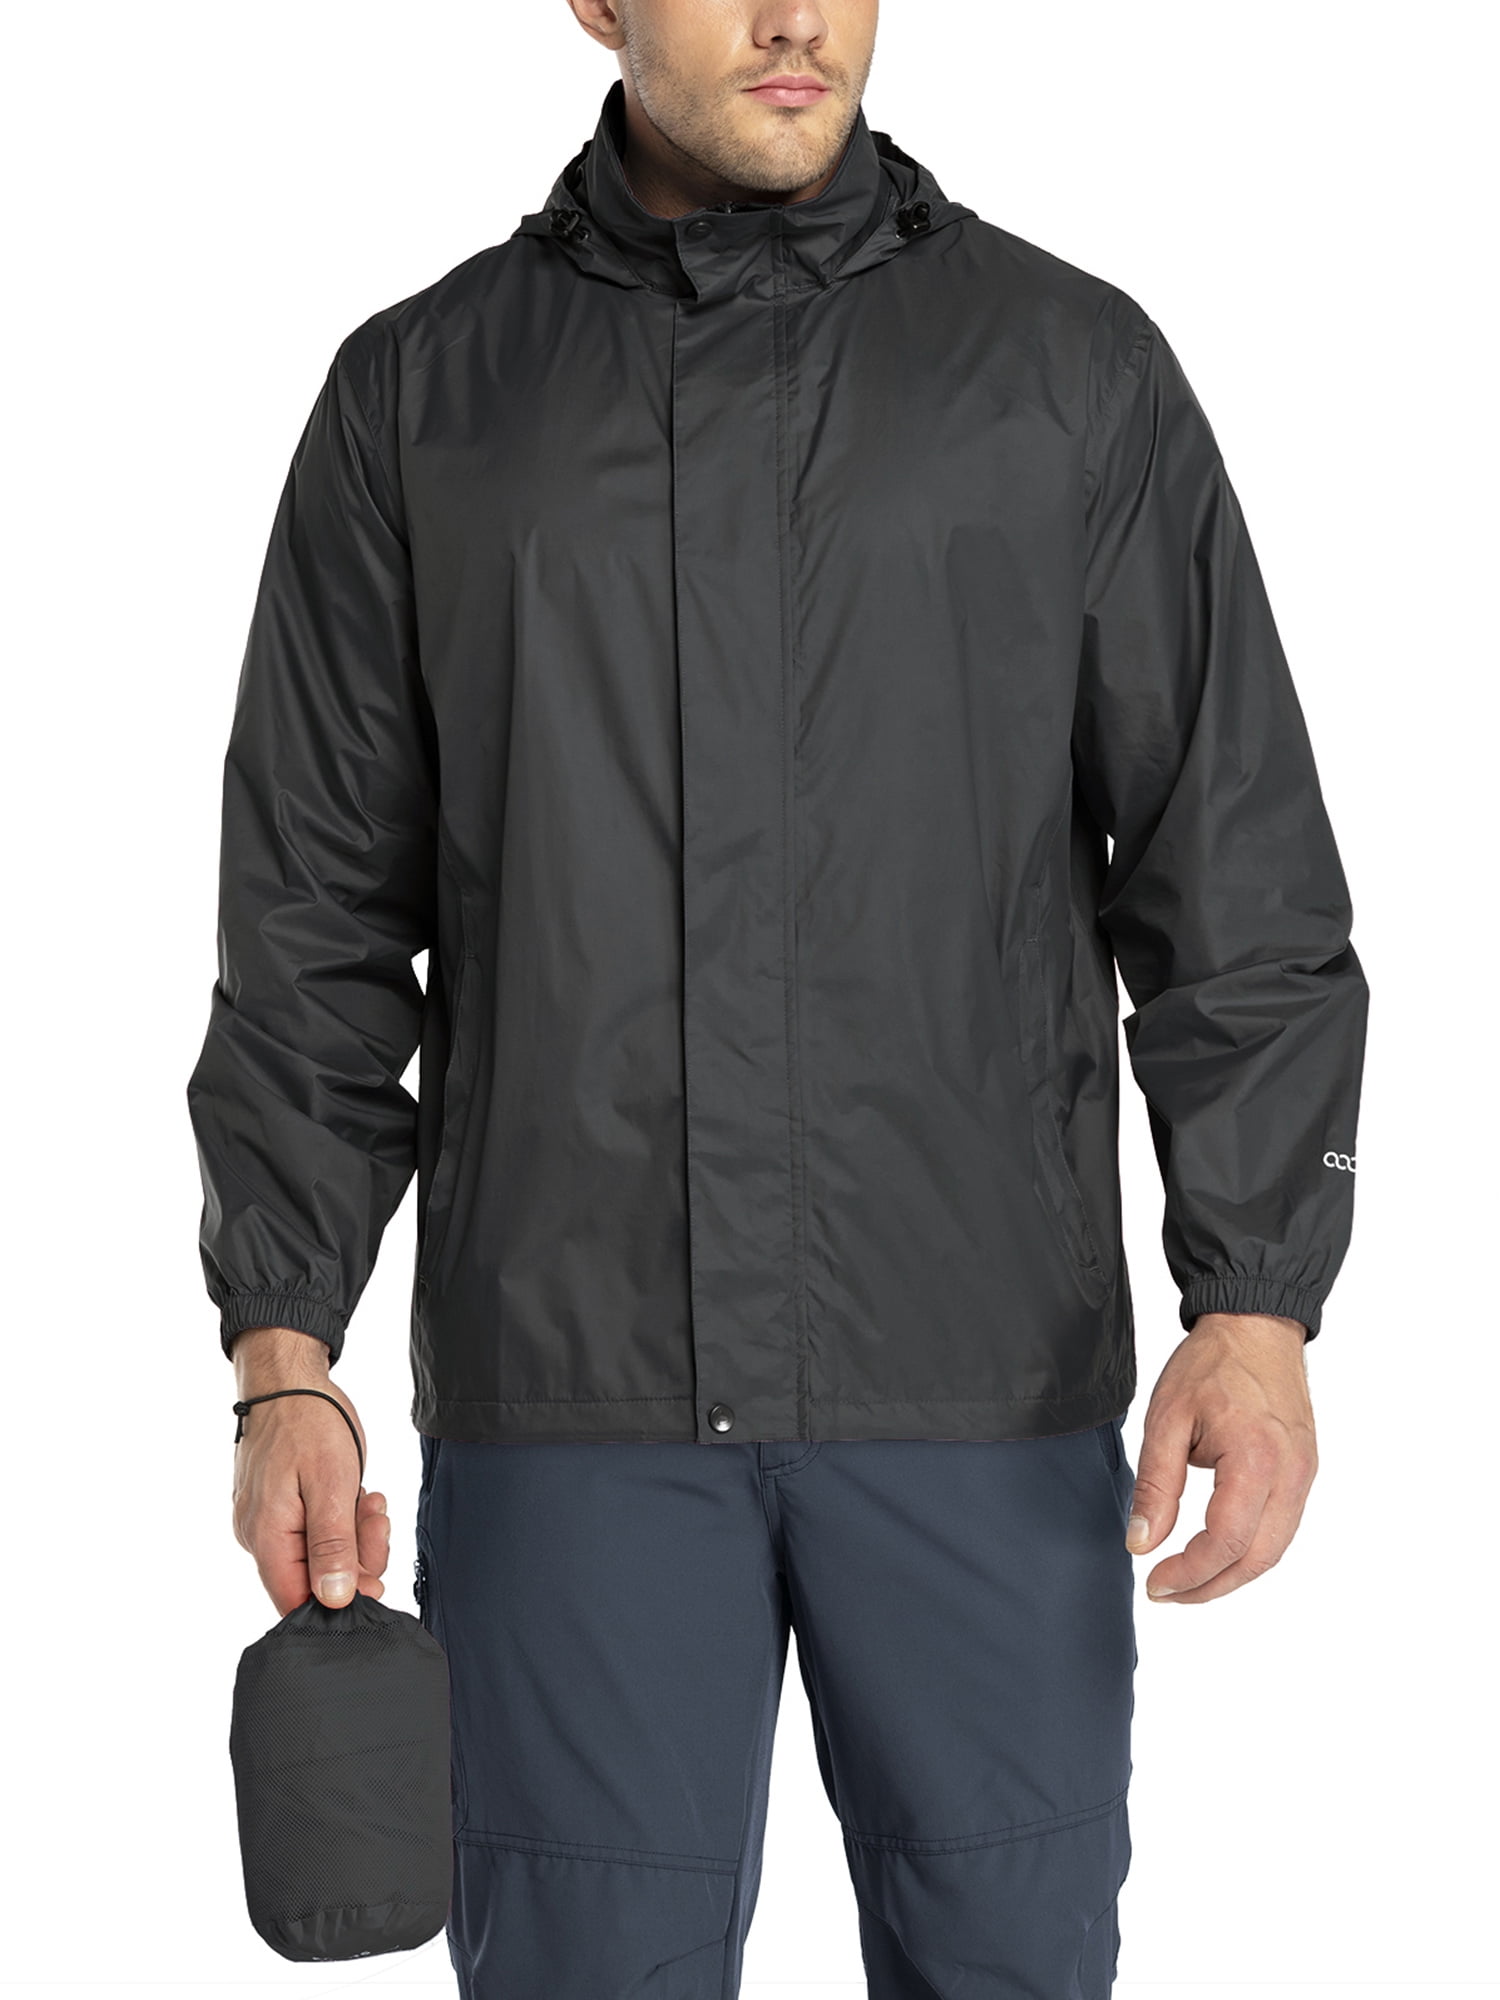 COOFANDY Mens Waterproof Rain Suit With Hood 2 Pieces Lightweight Fishing Camping Rain Jacket 